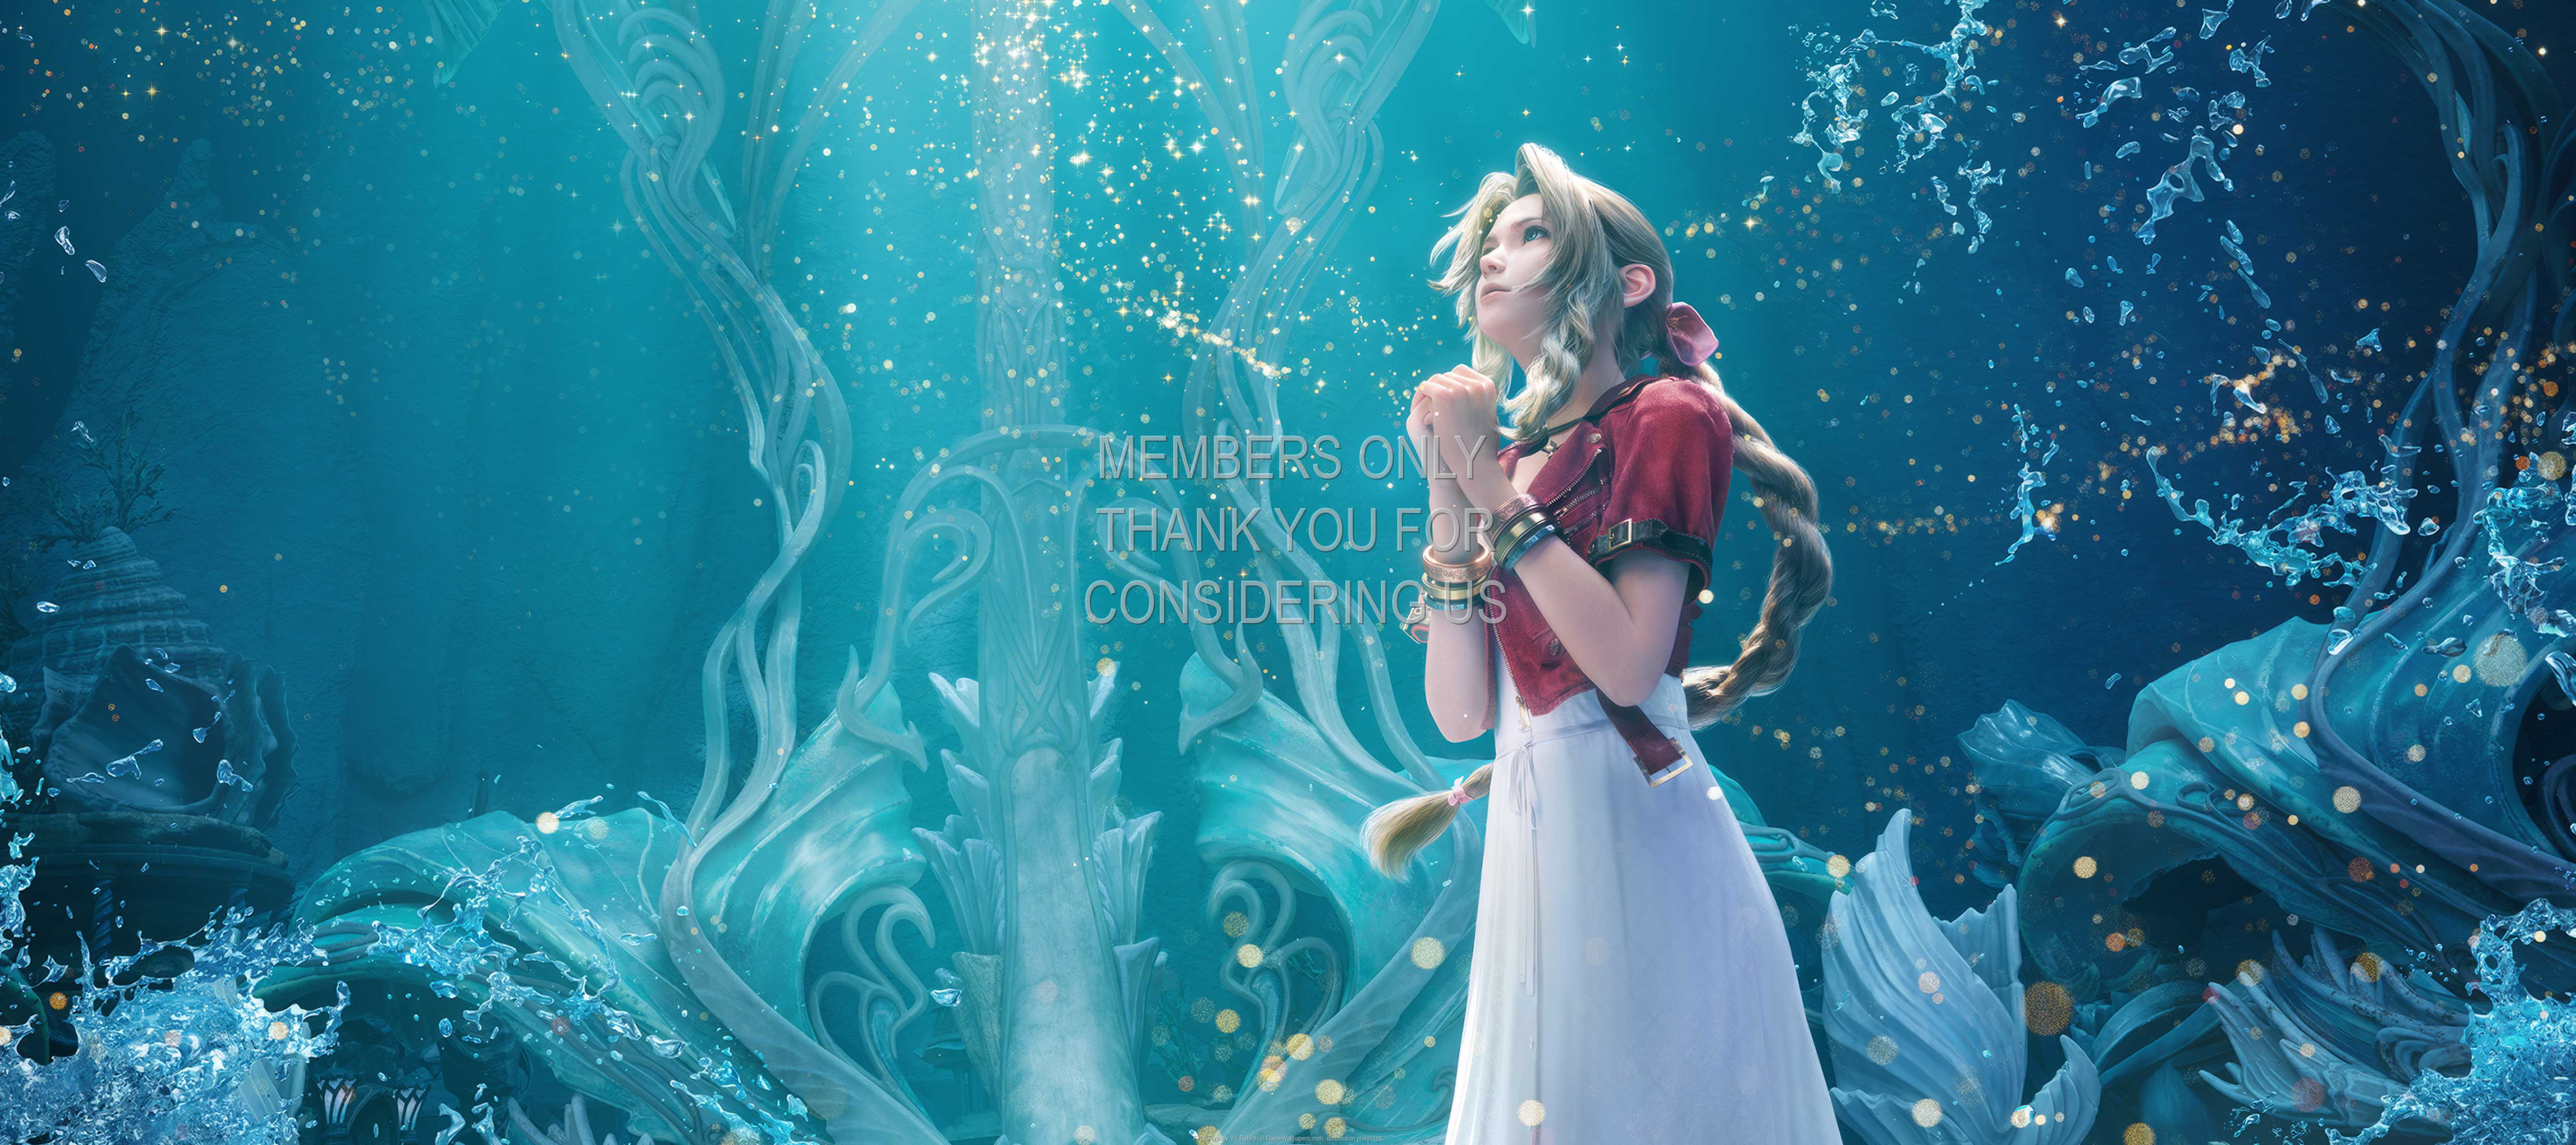 Final Fantasy VII Rebirth 1440p%20Horizontal Mobile wallpaper or background 02